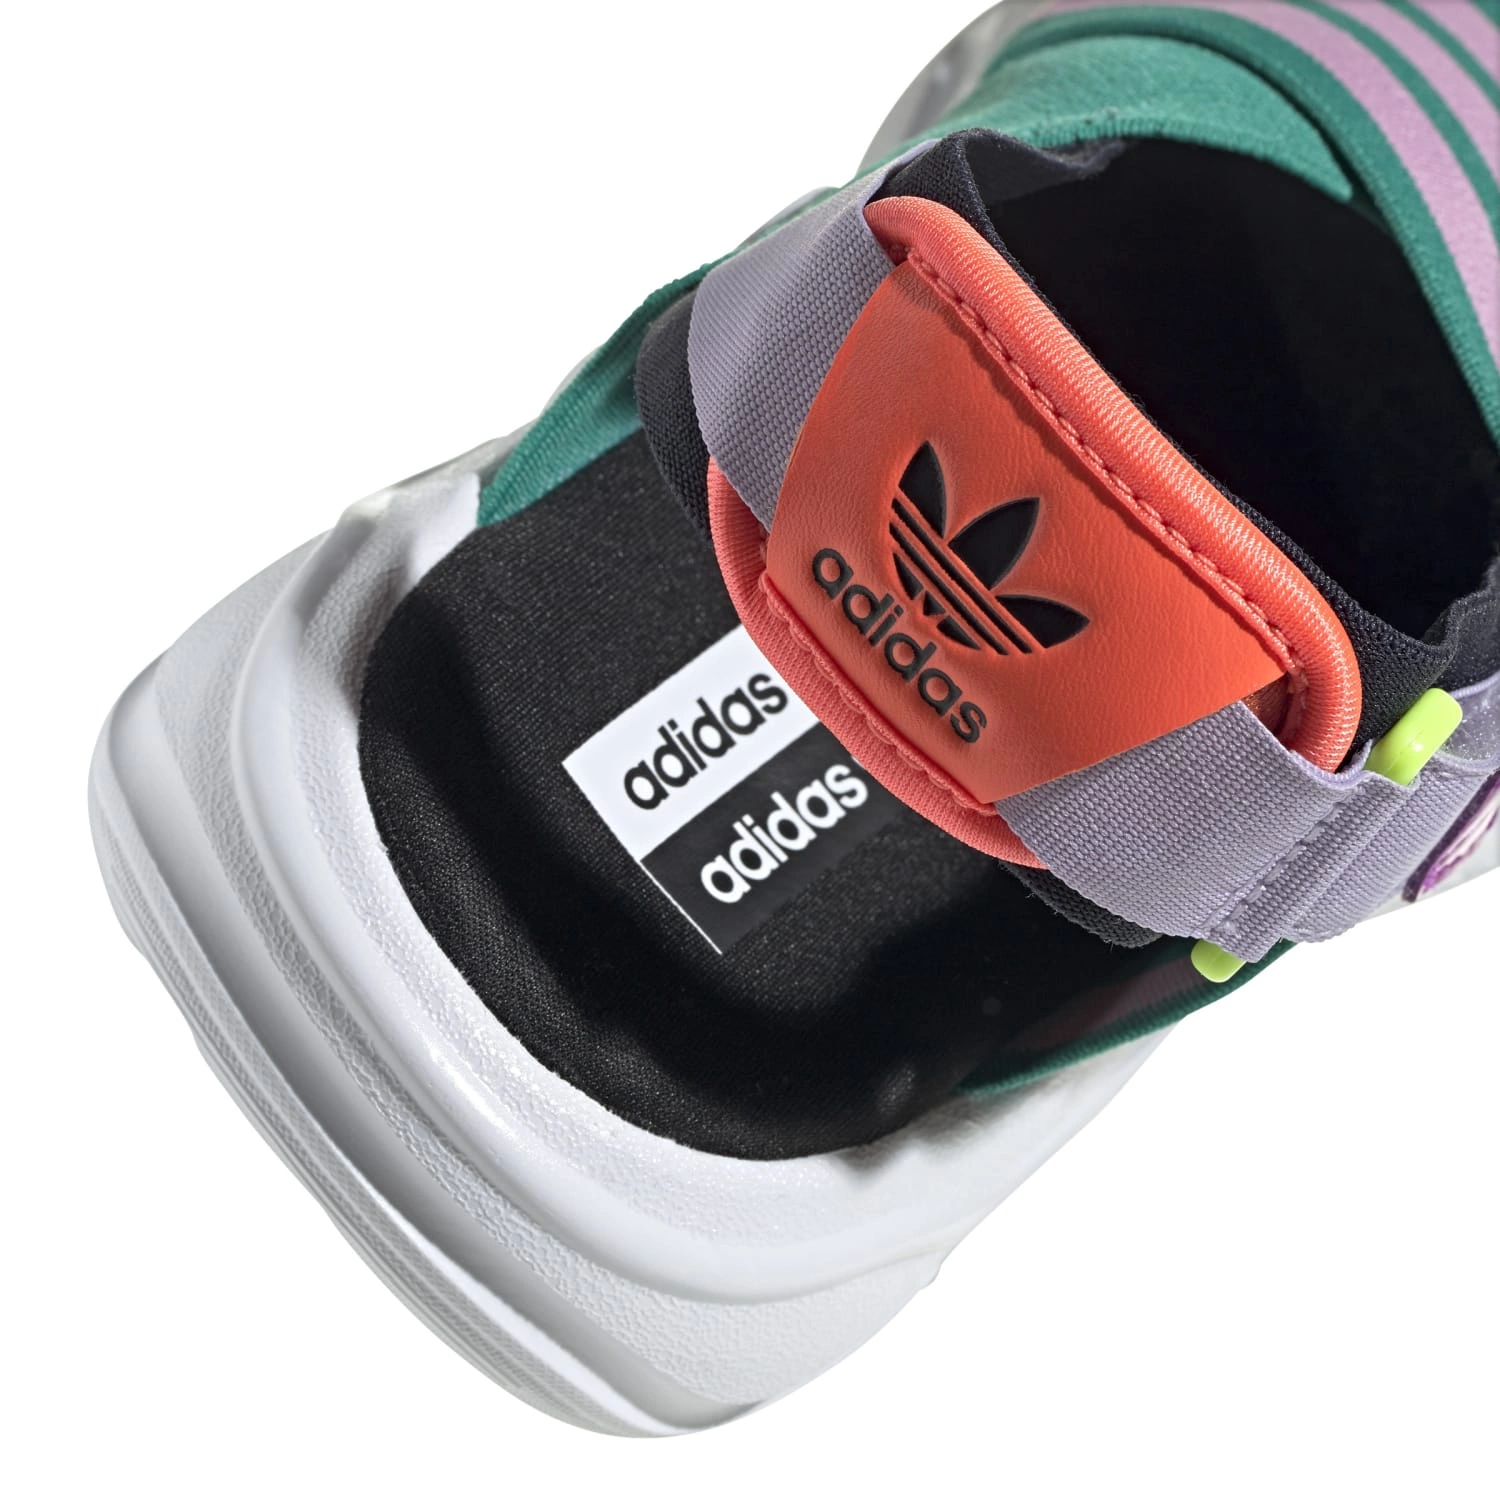 Adidas: Сандалии Adidas Magmur Sandal W